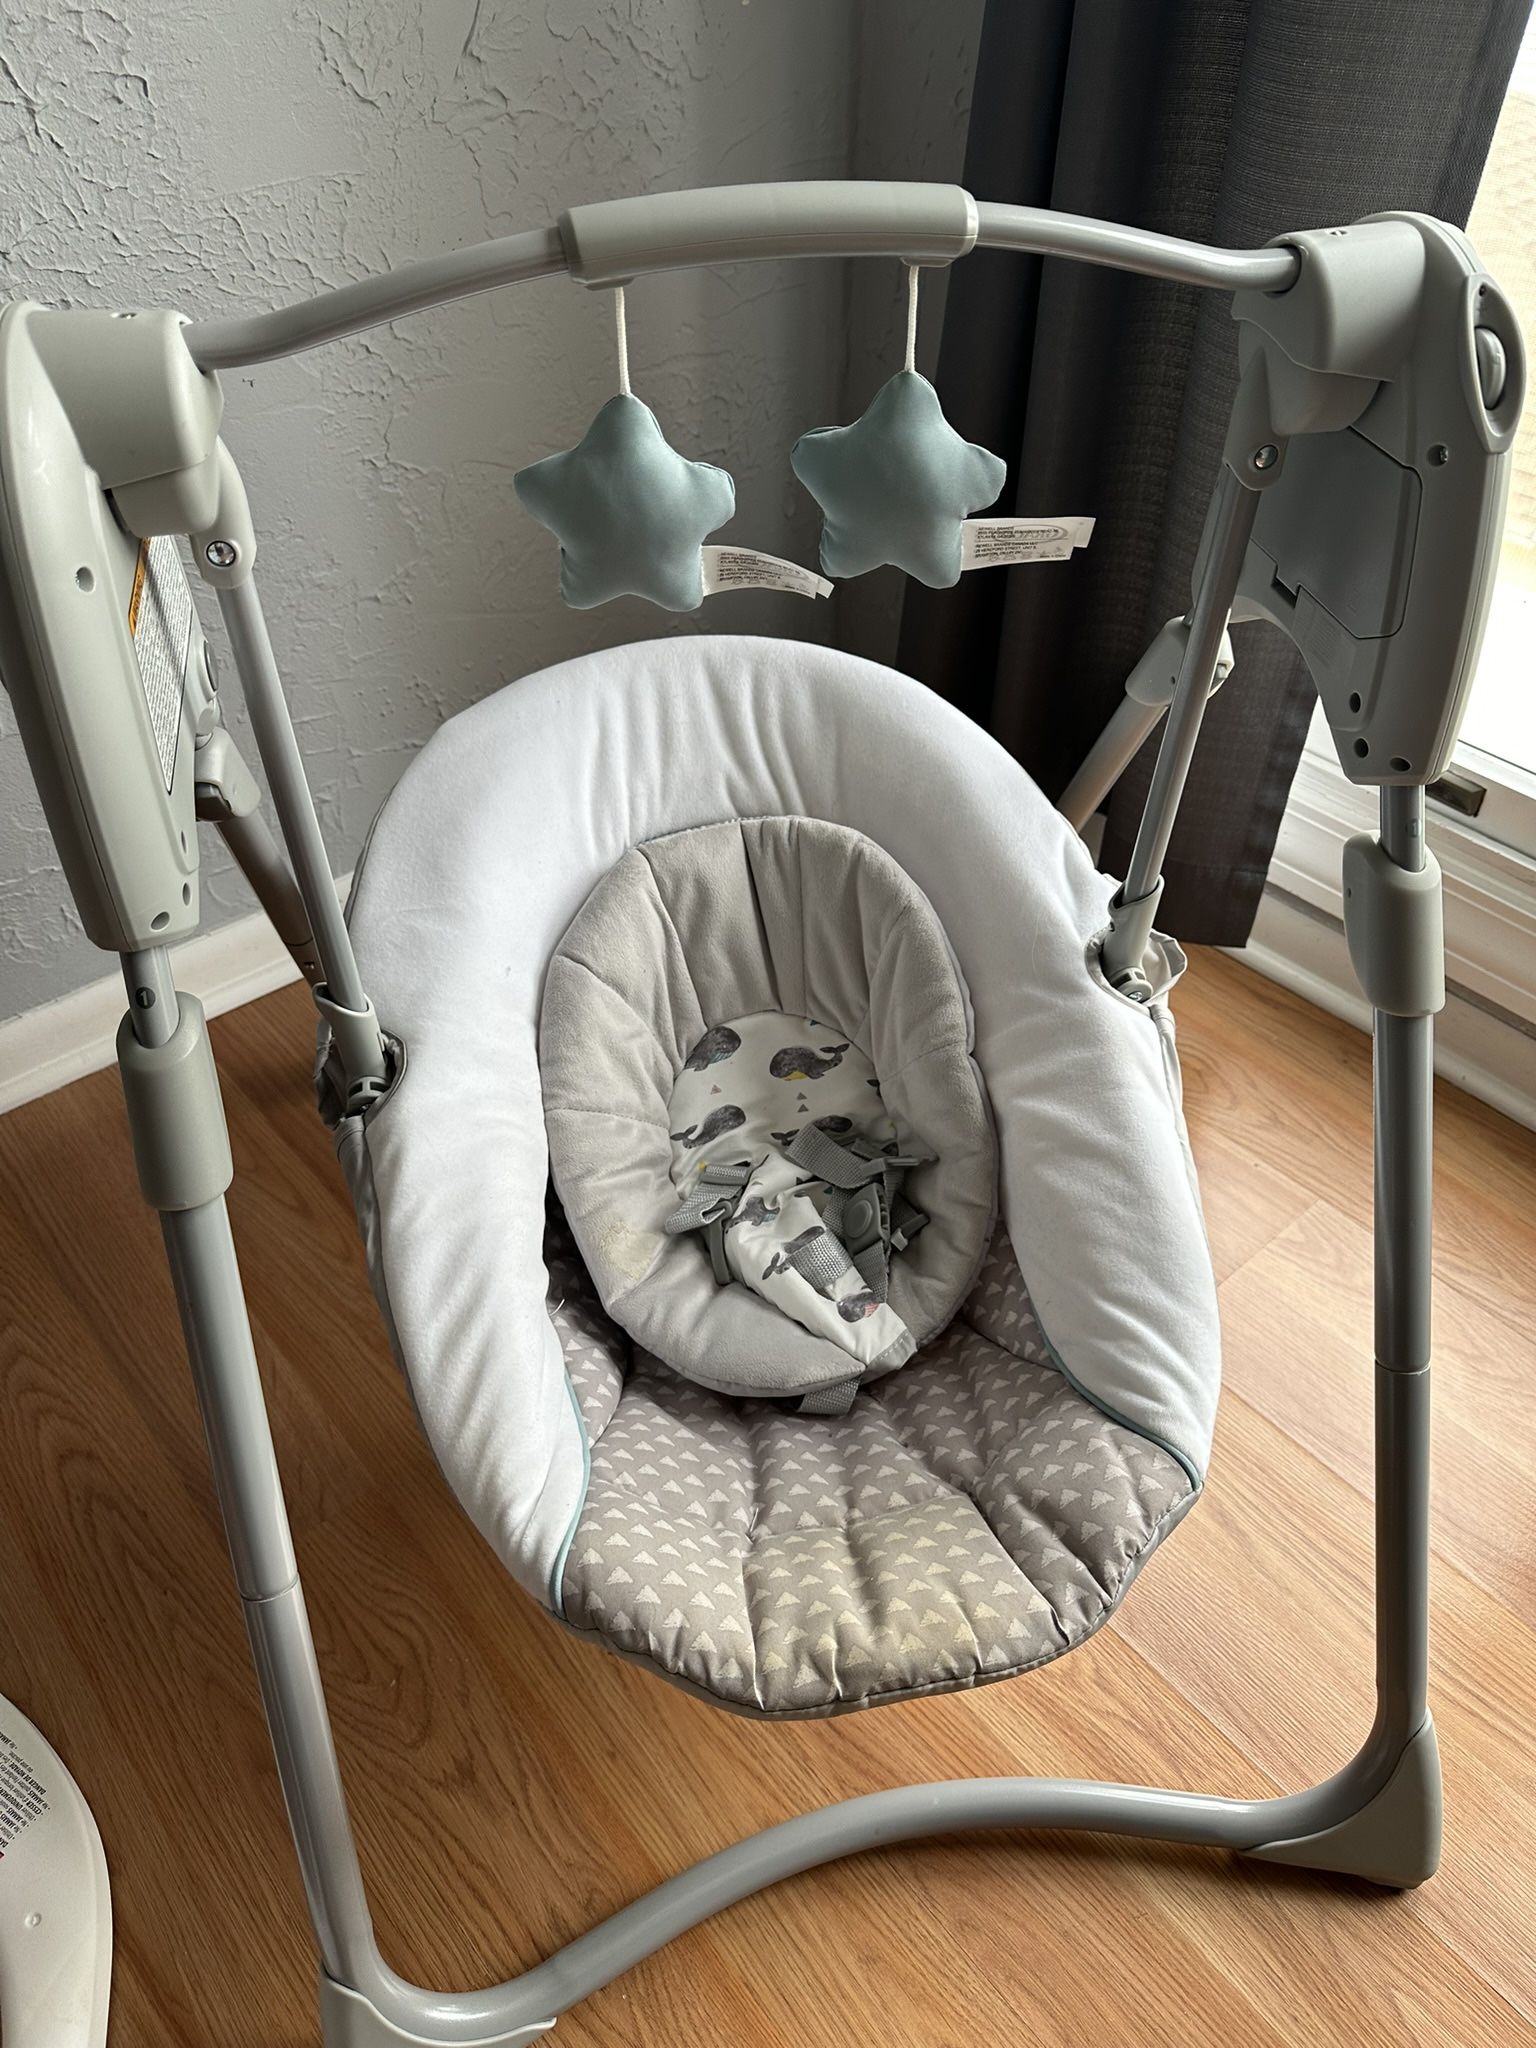 Baby Swing Chair 